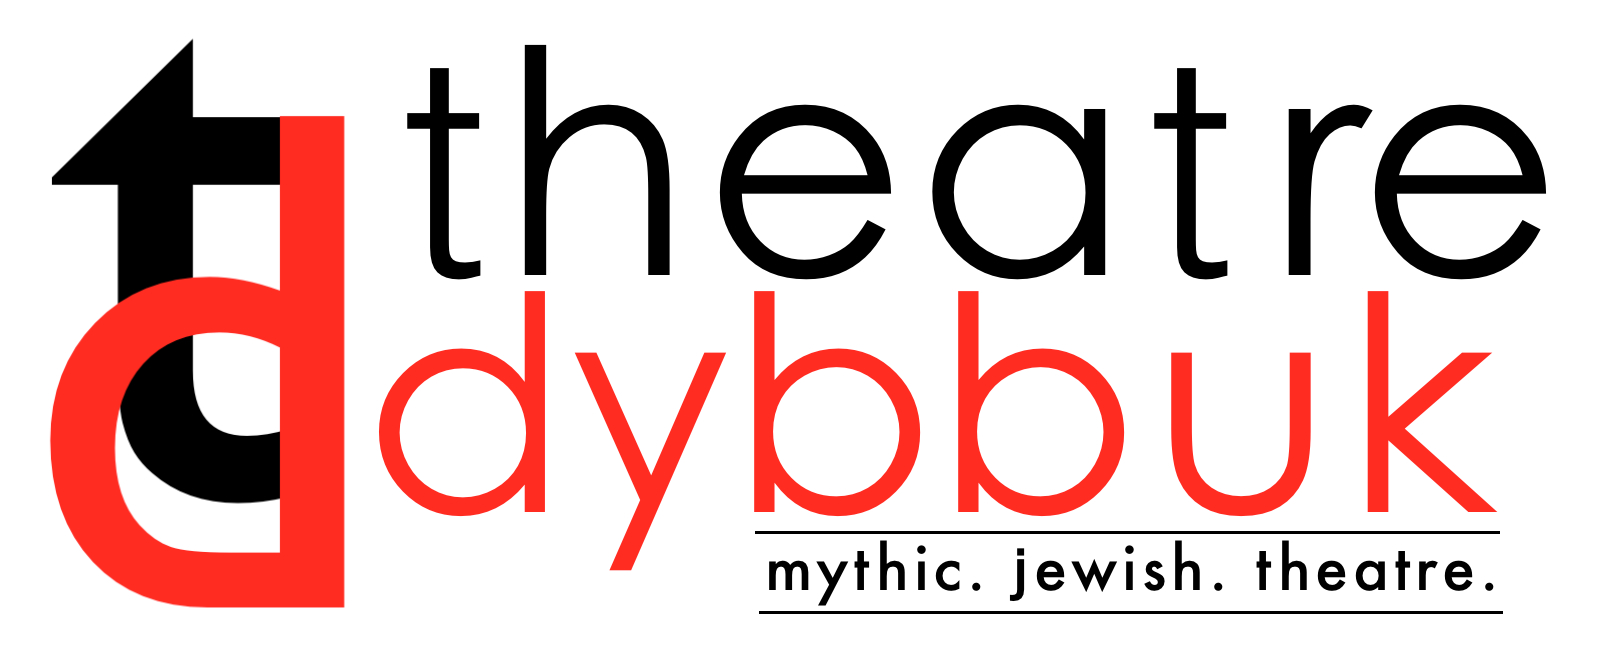 theatre dybbuk logo